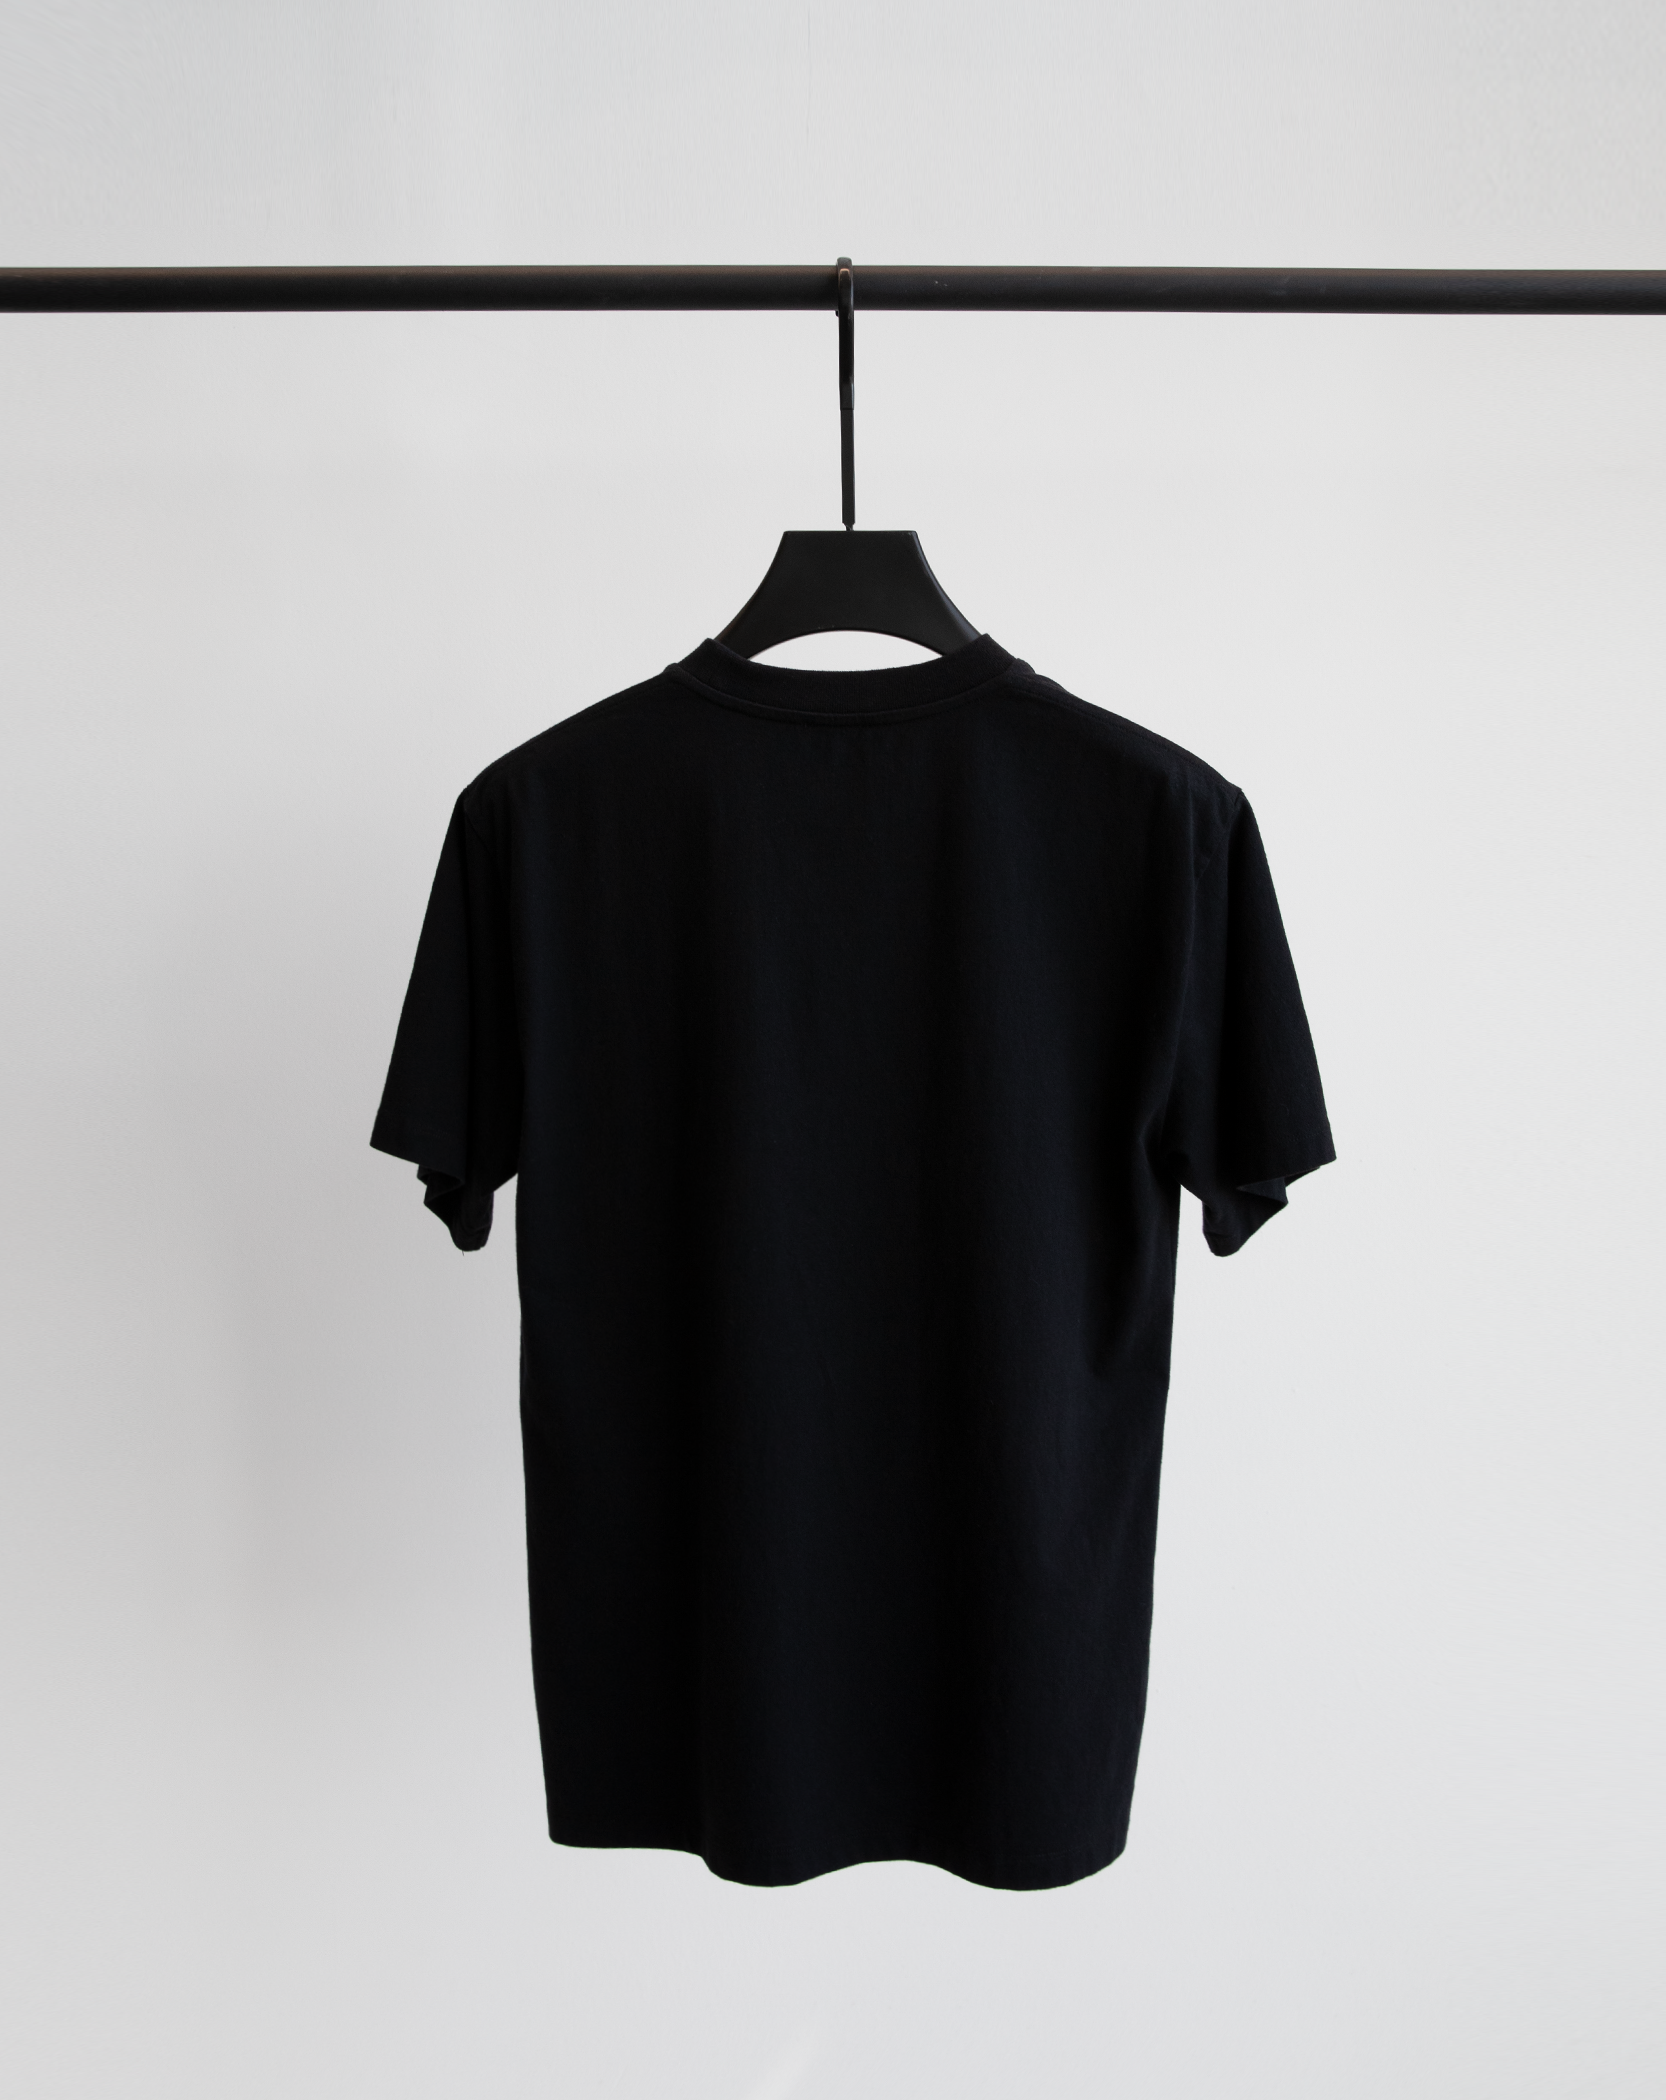 Aries - T-shirt black